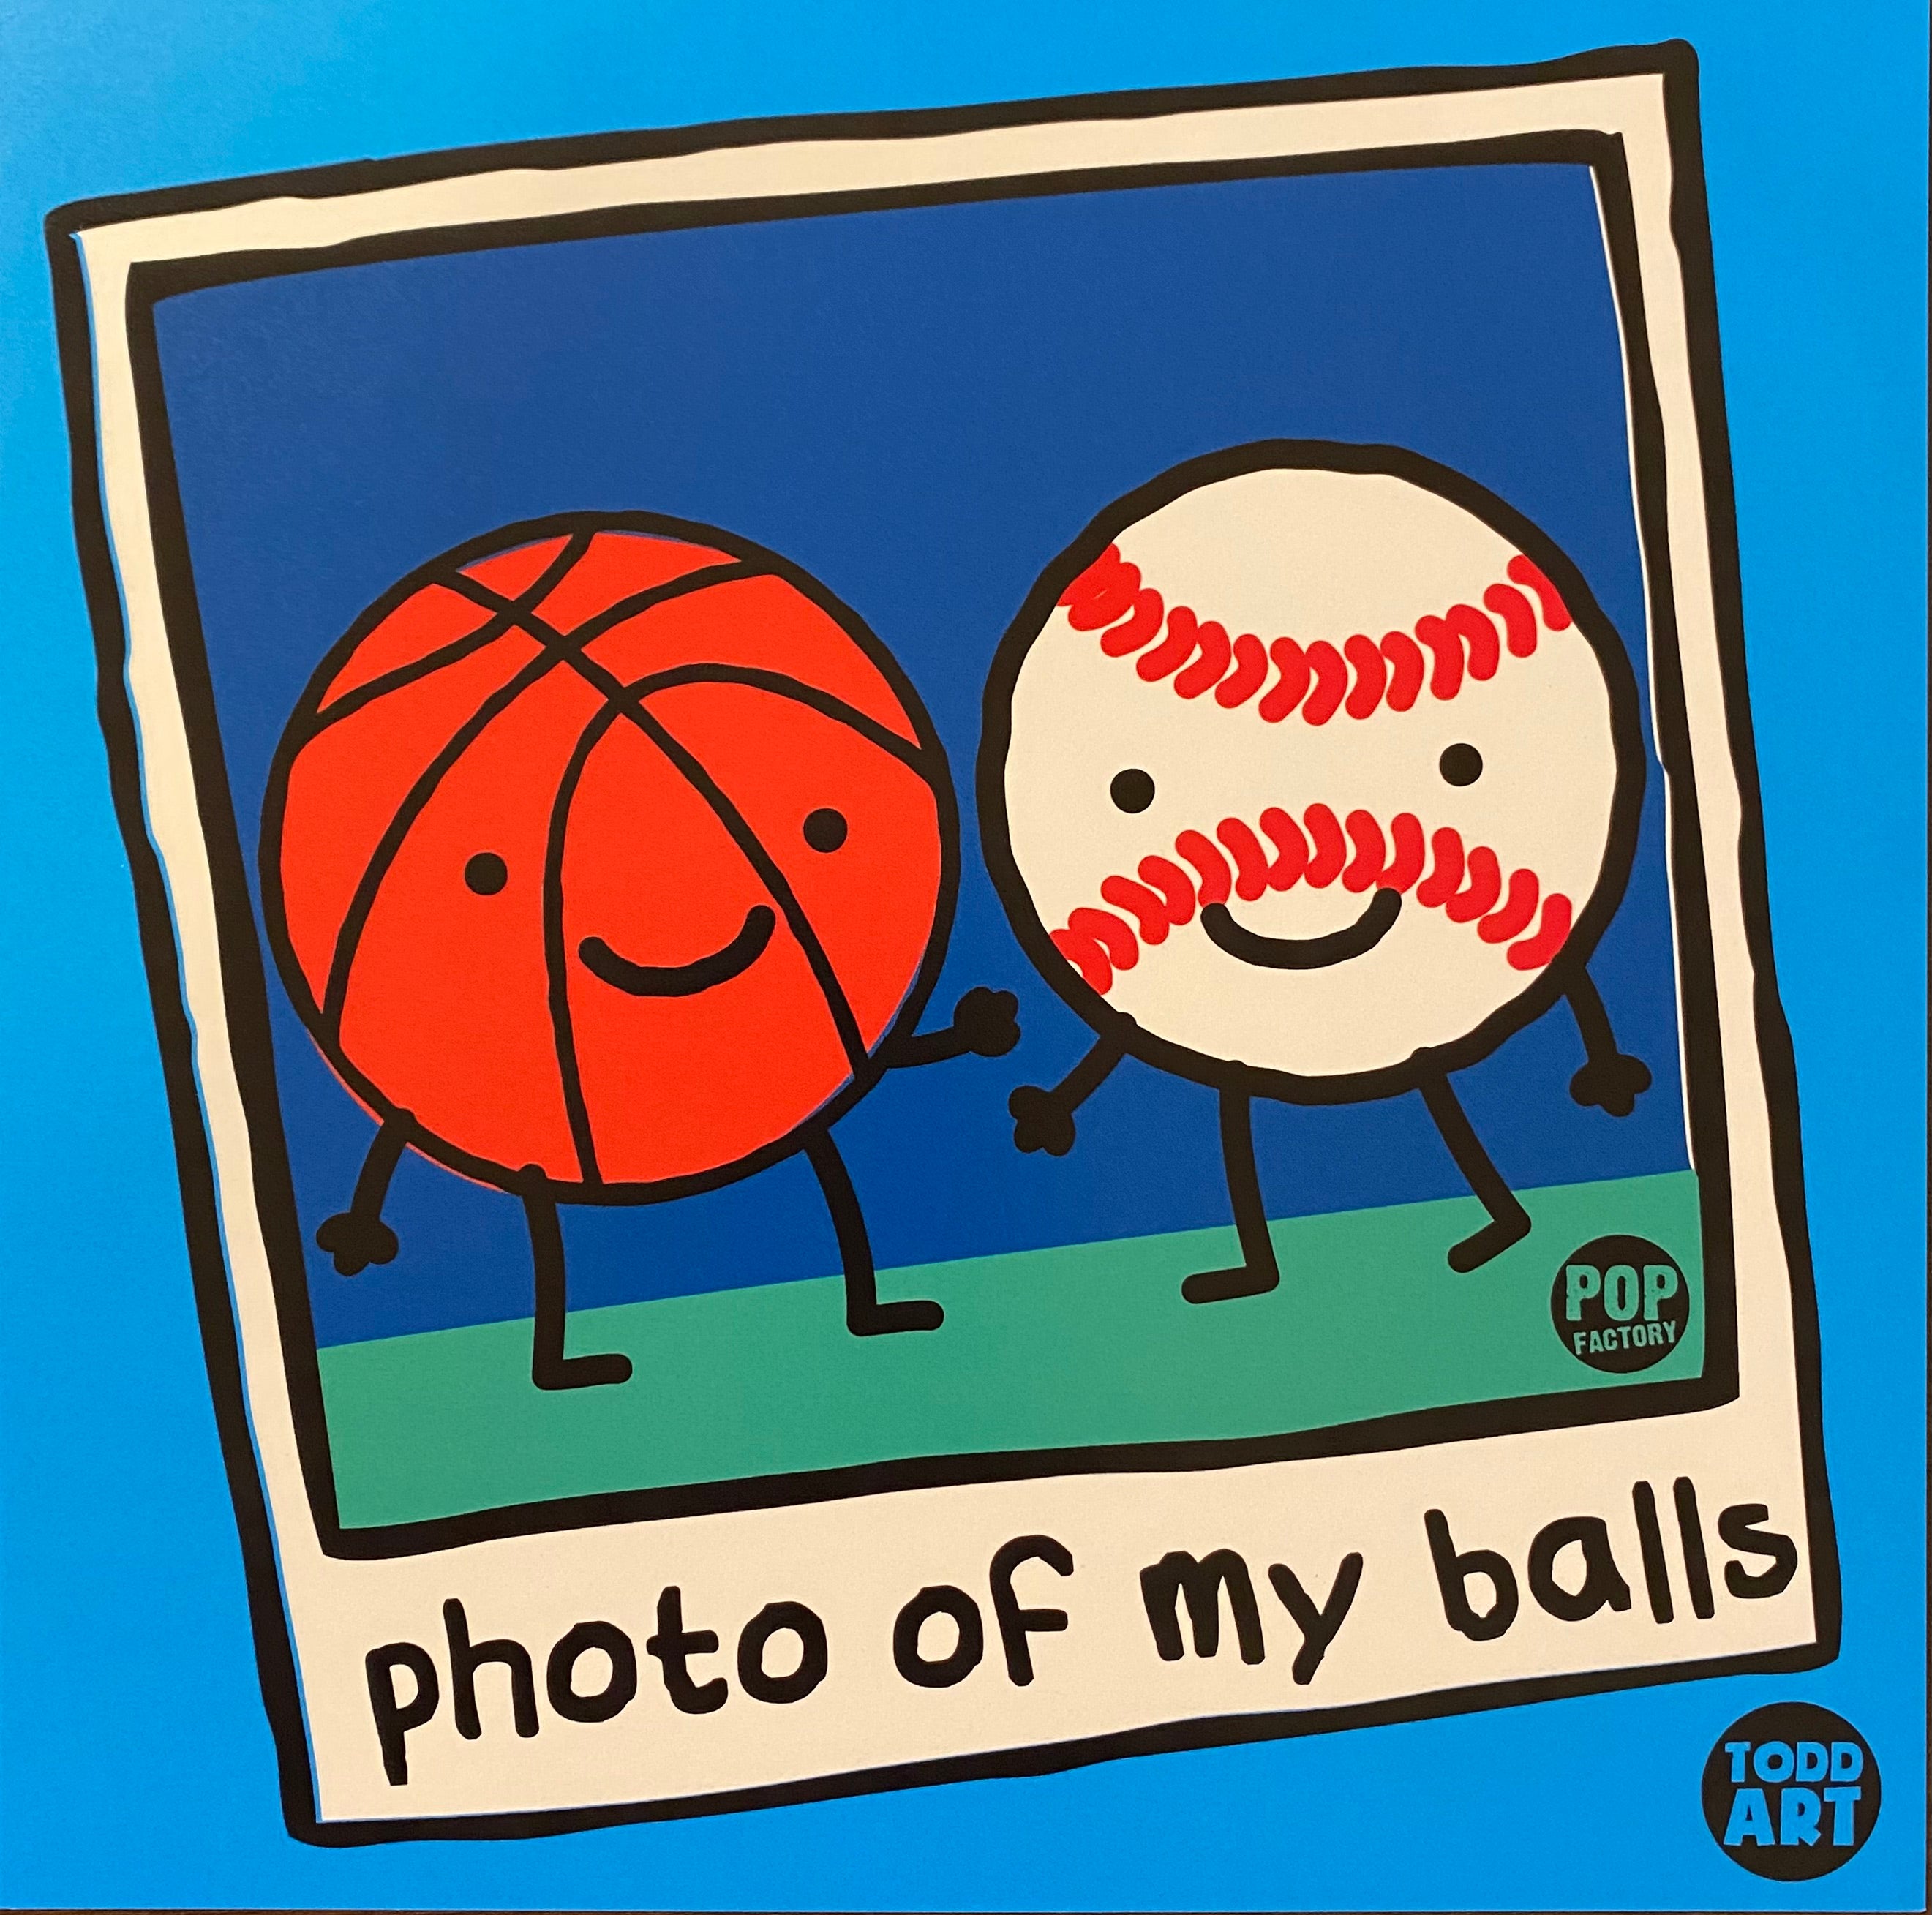 Photo of My Balls